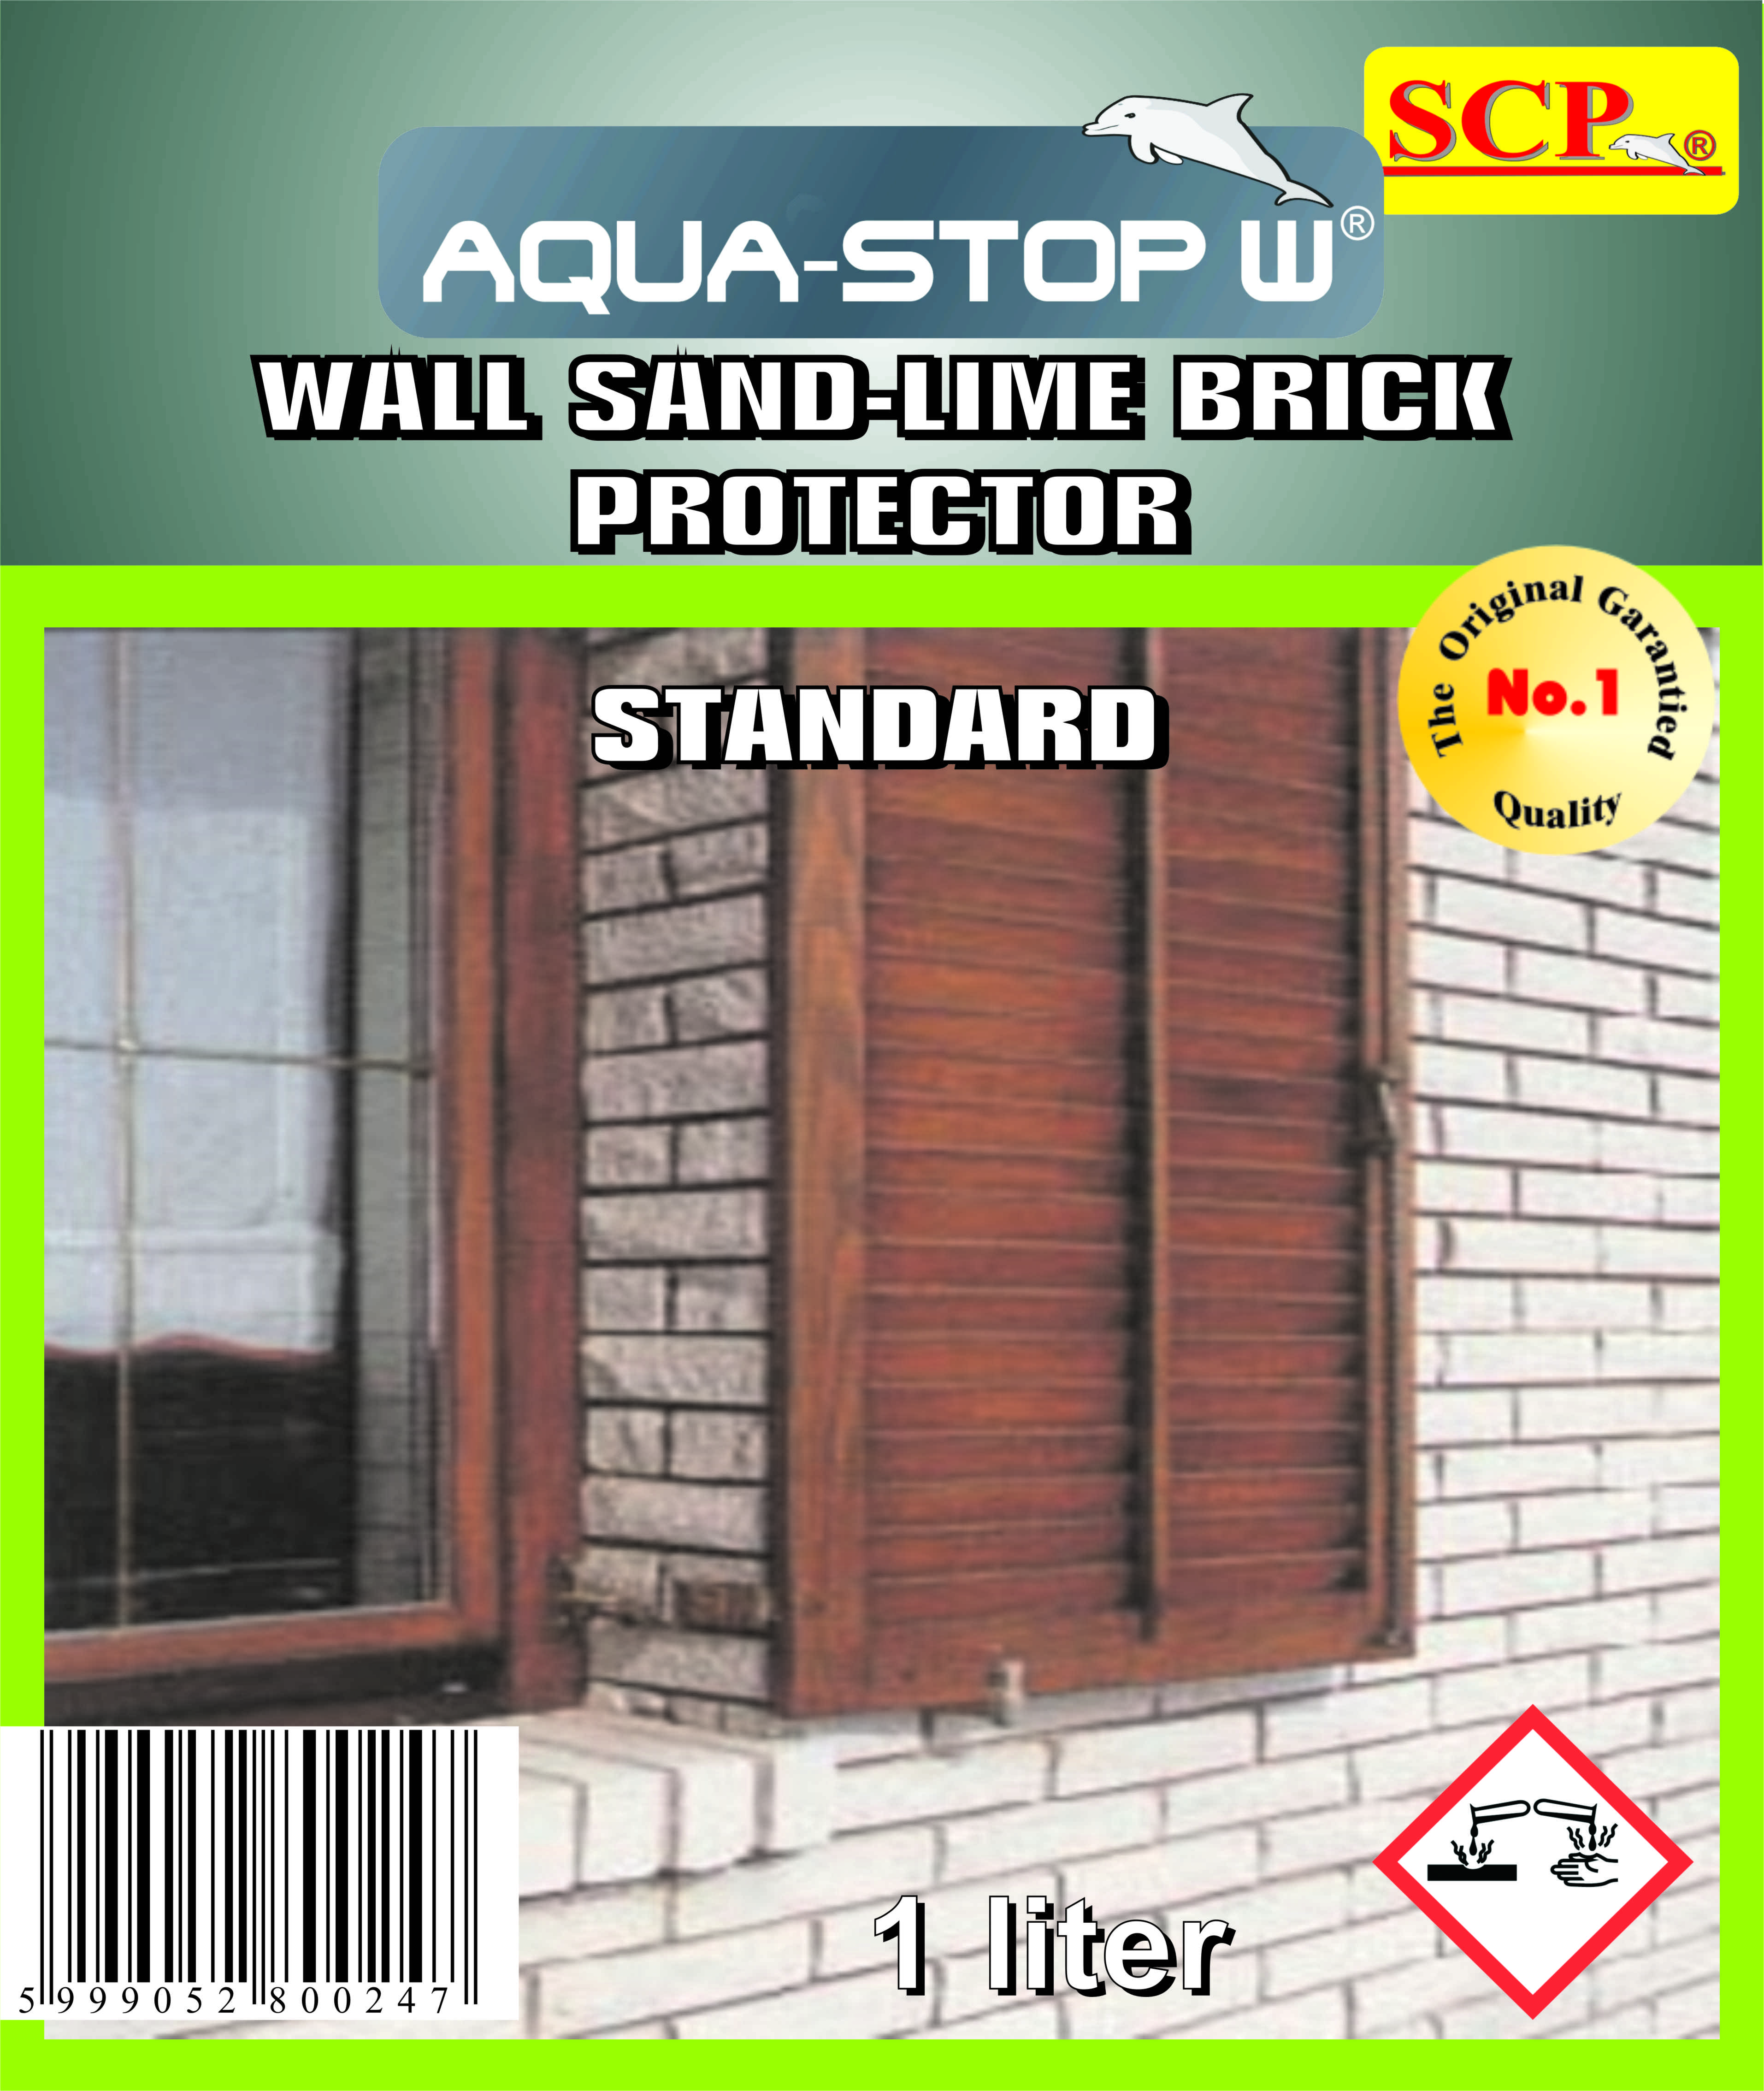 Wall Sand-Lime Brick Protector Standard